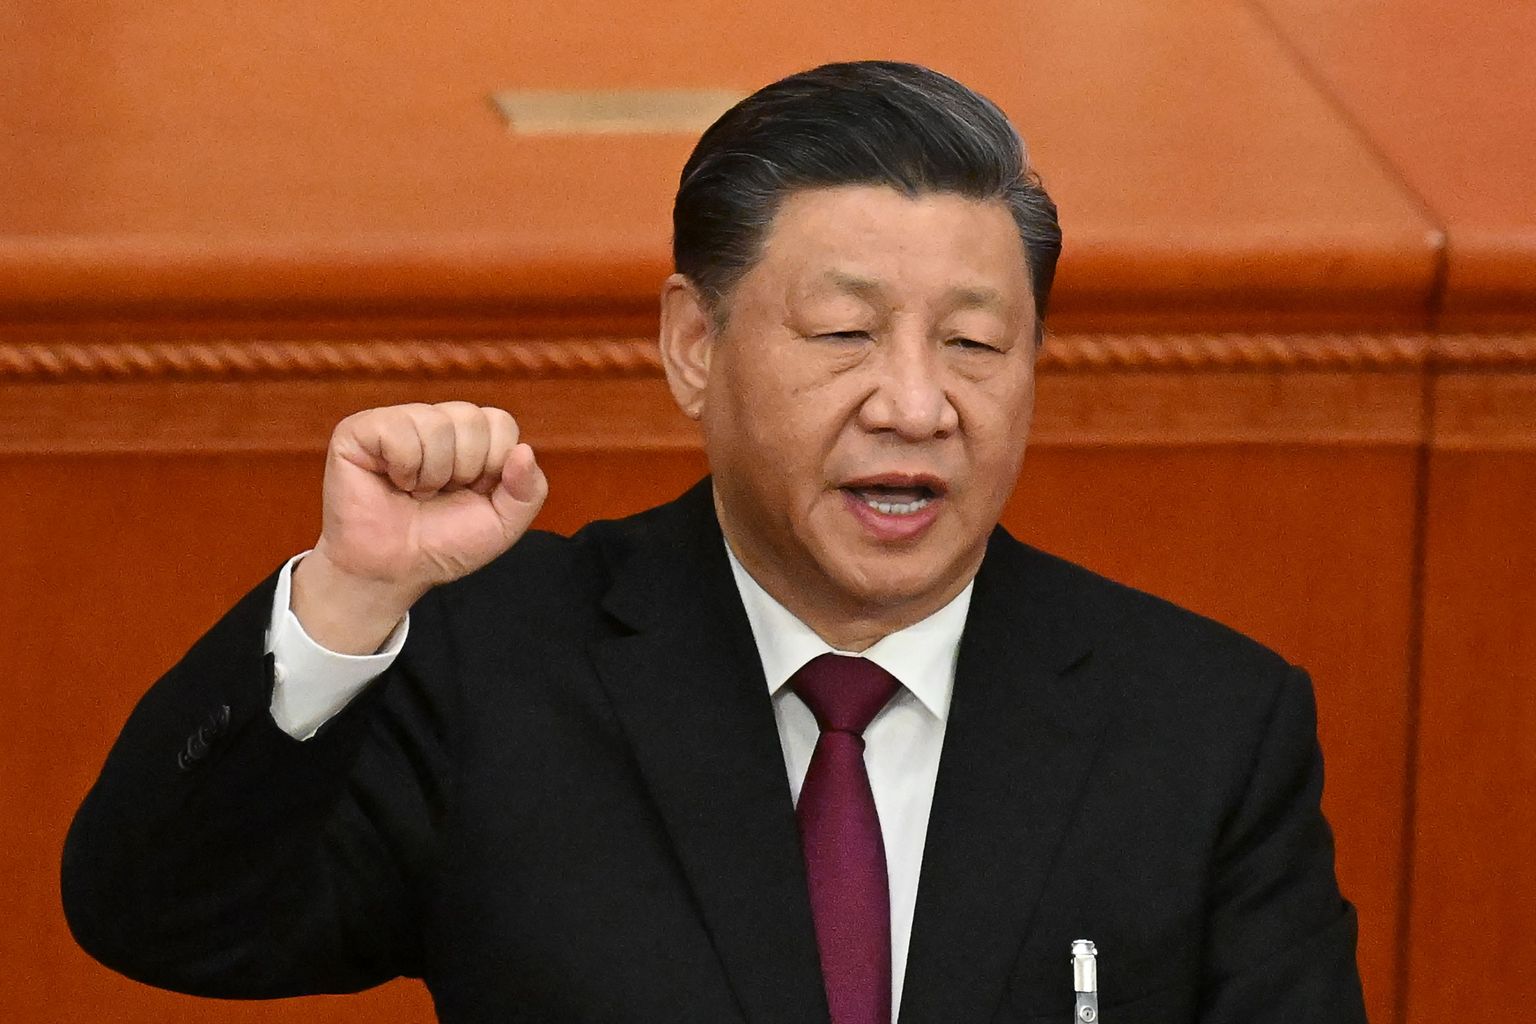 Hiina president Xi Jinping 10. märtsil 2023 parteikongressil ametivannet andmas.